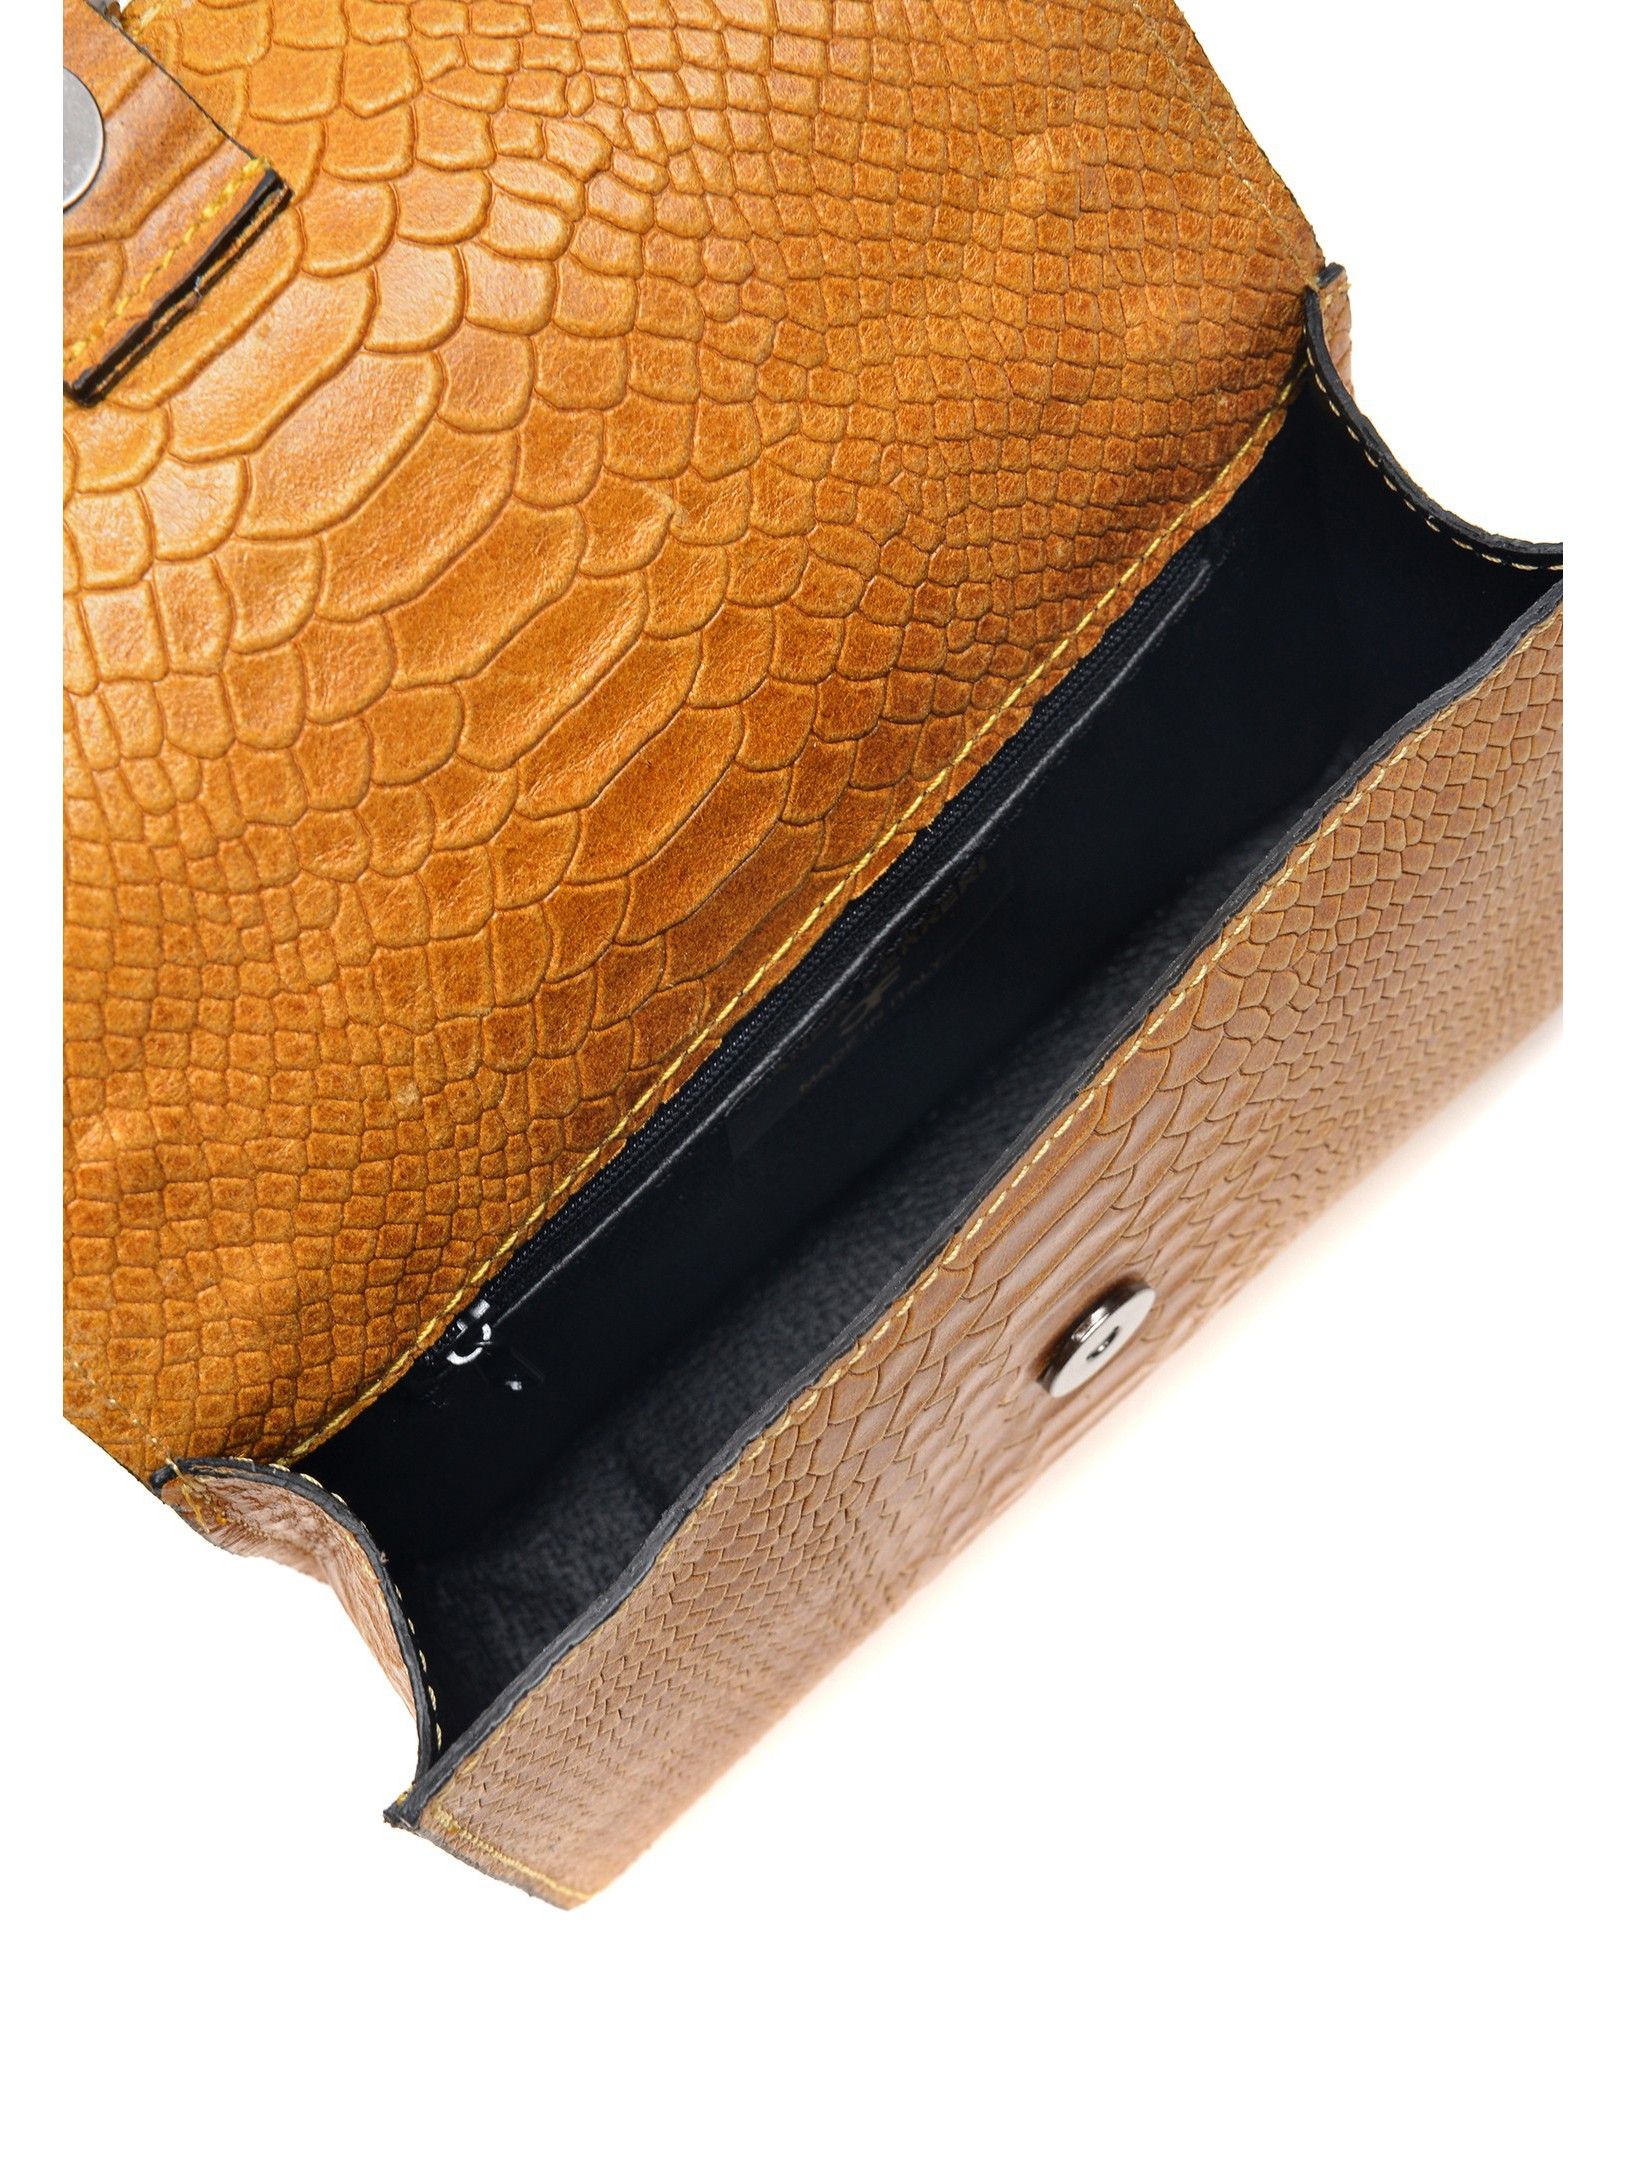 Shoulder Bag
100% cow leather
Chain shoulder strap
Magnetic clasp closure
Snake skin pattern
Interior zip pocket
Dimensions (L): 14x19.5x5 cm
Handle: /
Shoulder strap: 120 cm